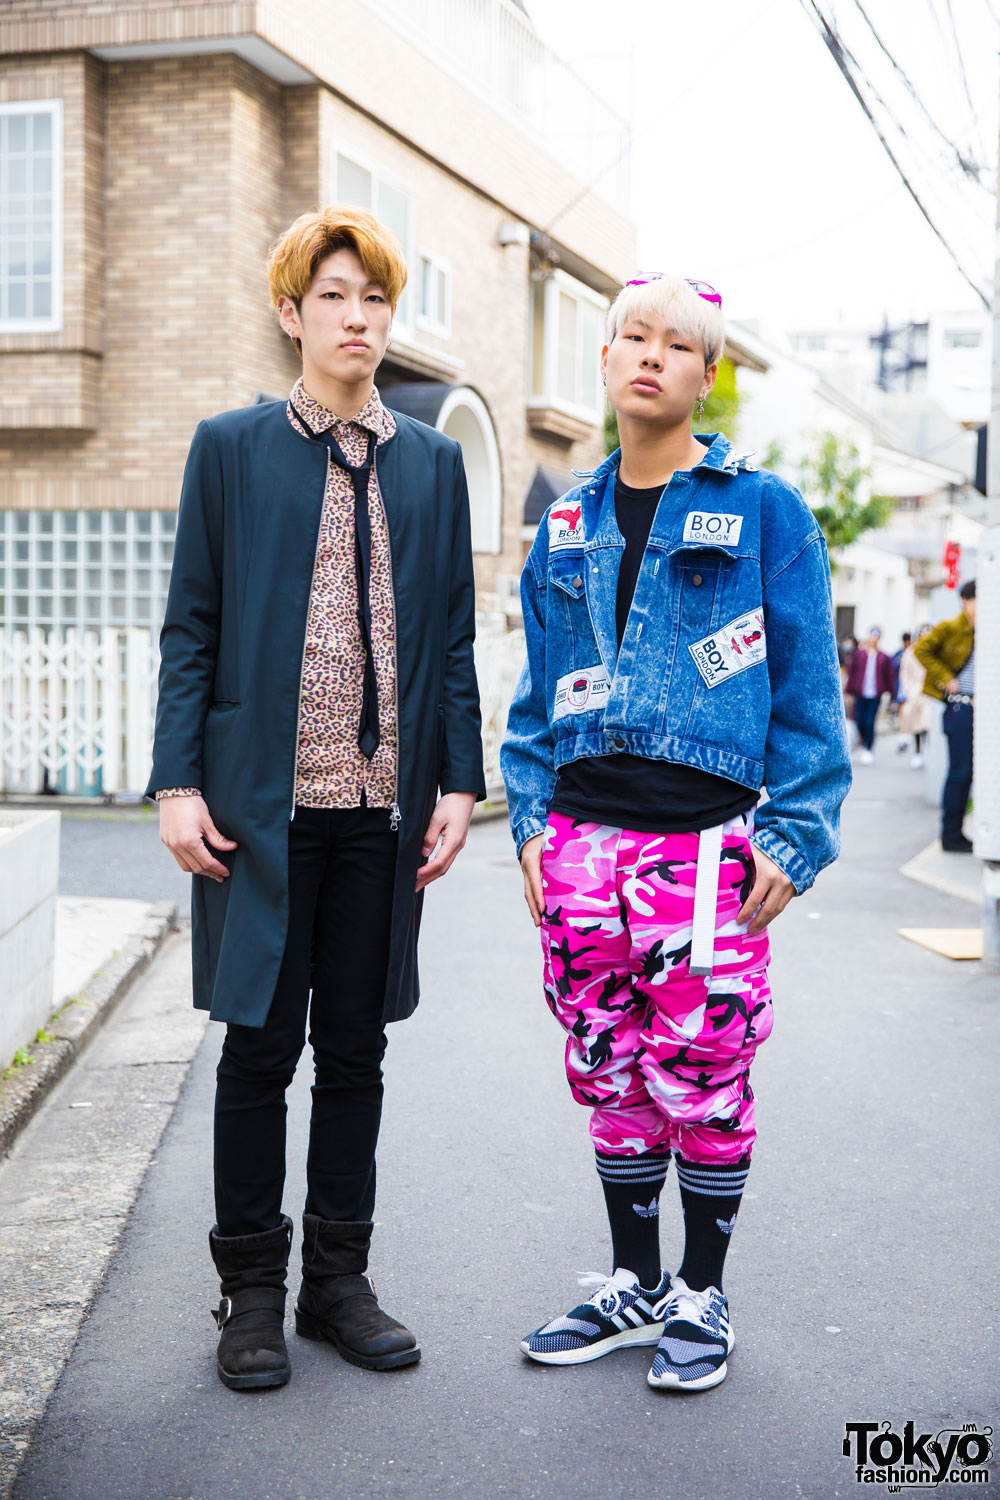 Harajuku Guys in Street Fashion w/ GU, Boy London, Rothco, & Y-3 Pure ...